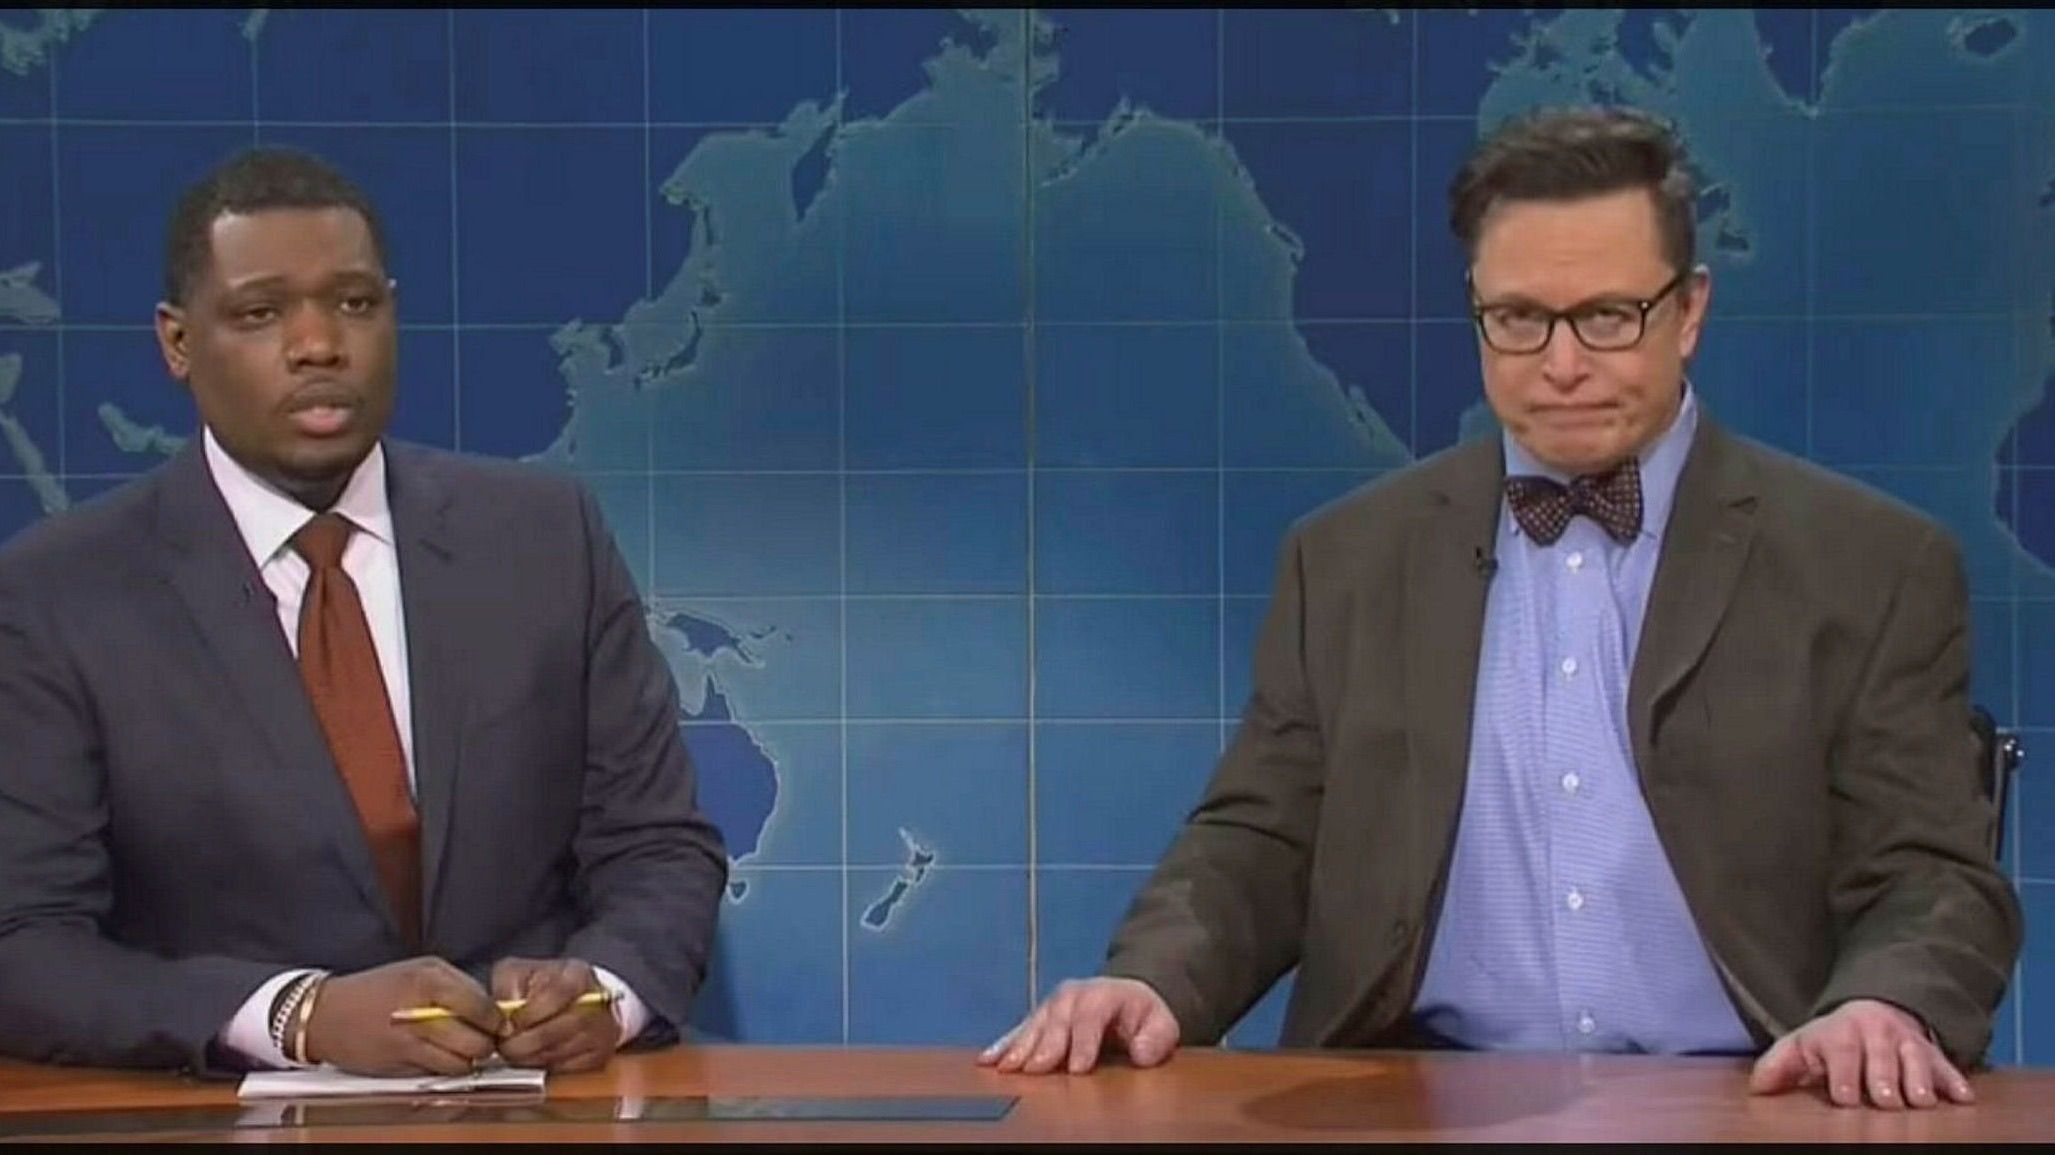 2 actors pretending to be news presenters on SNL. One is Elon Musk.